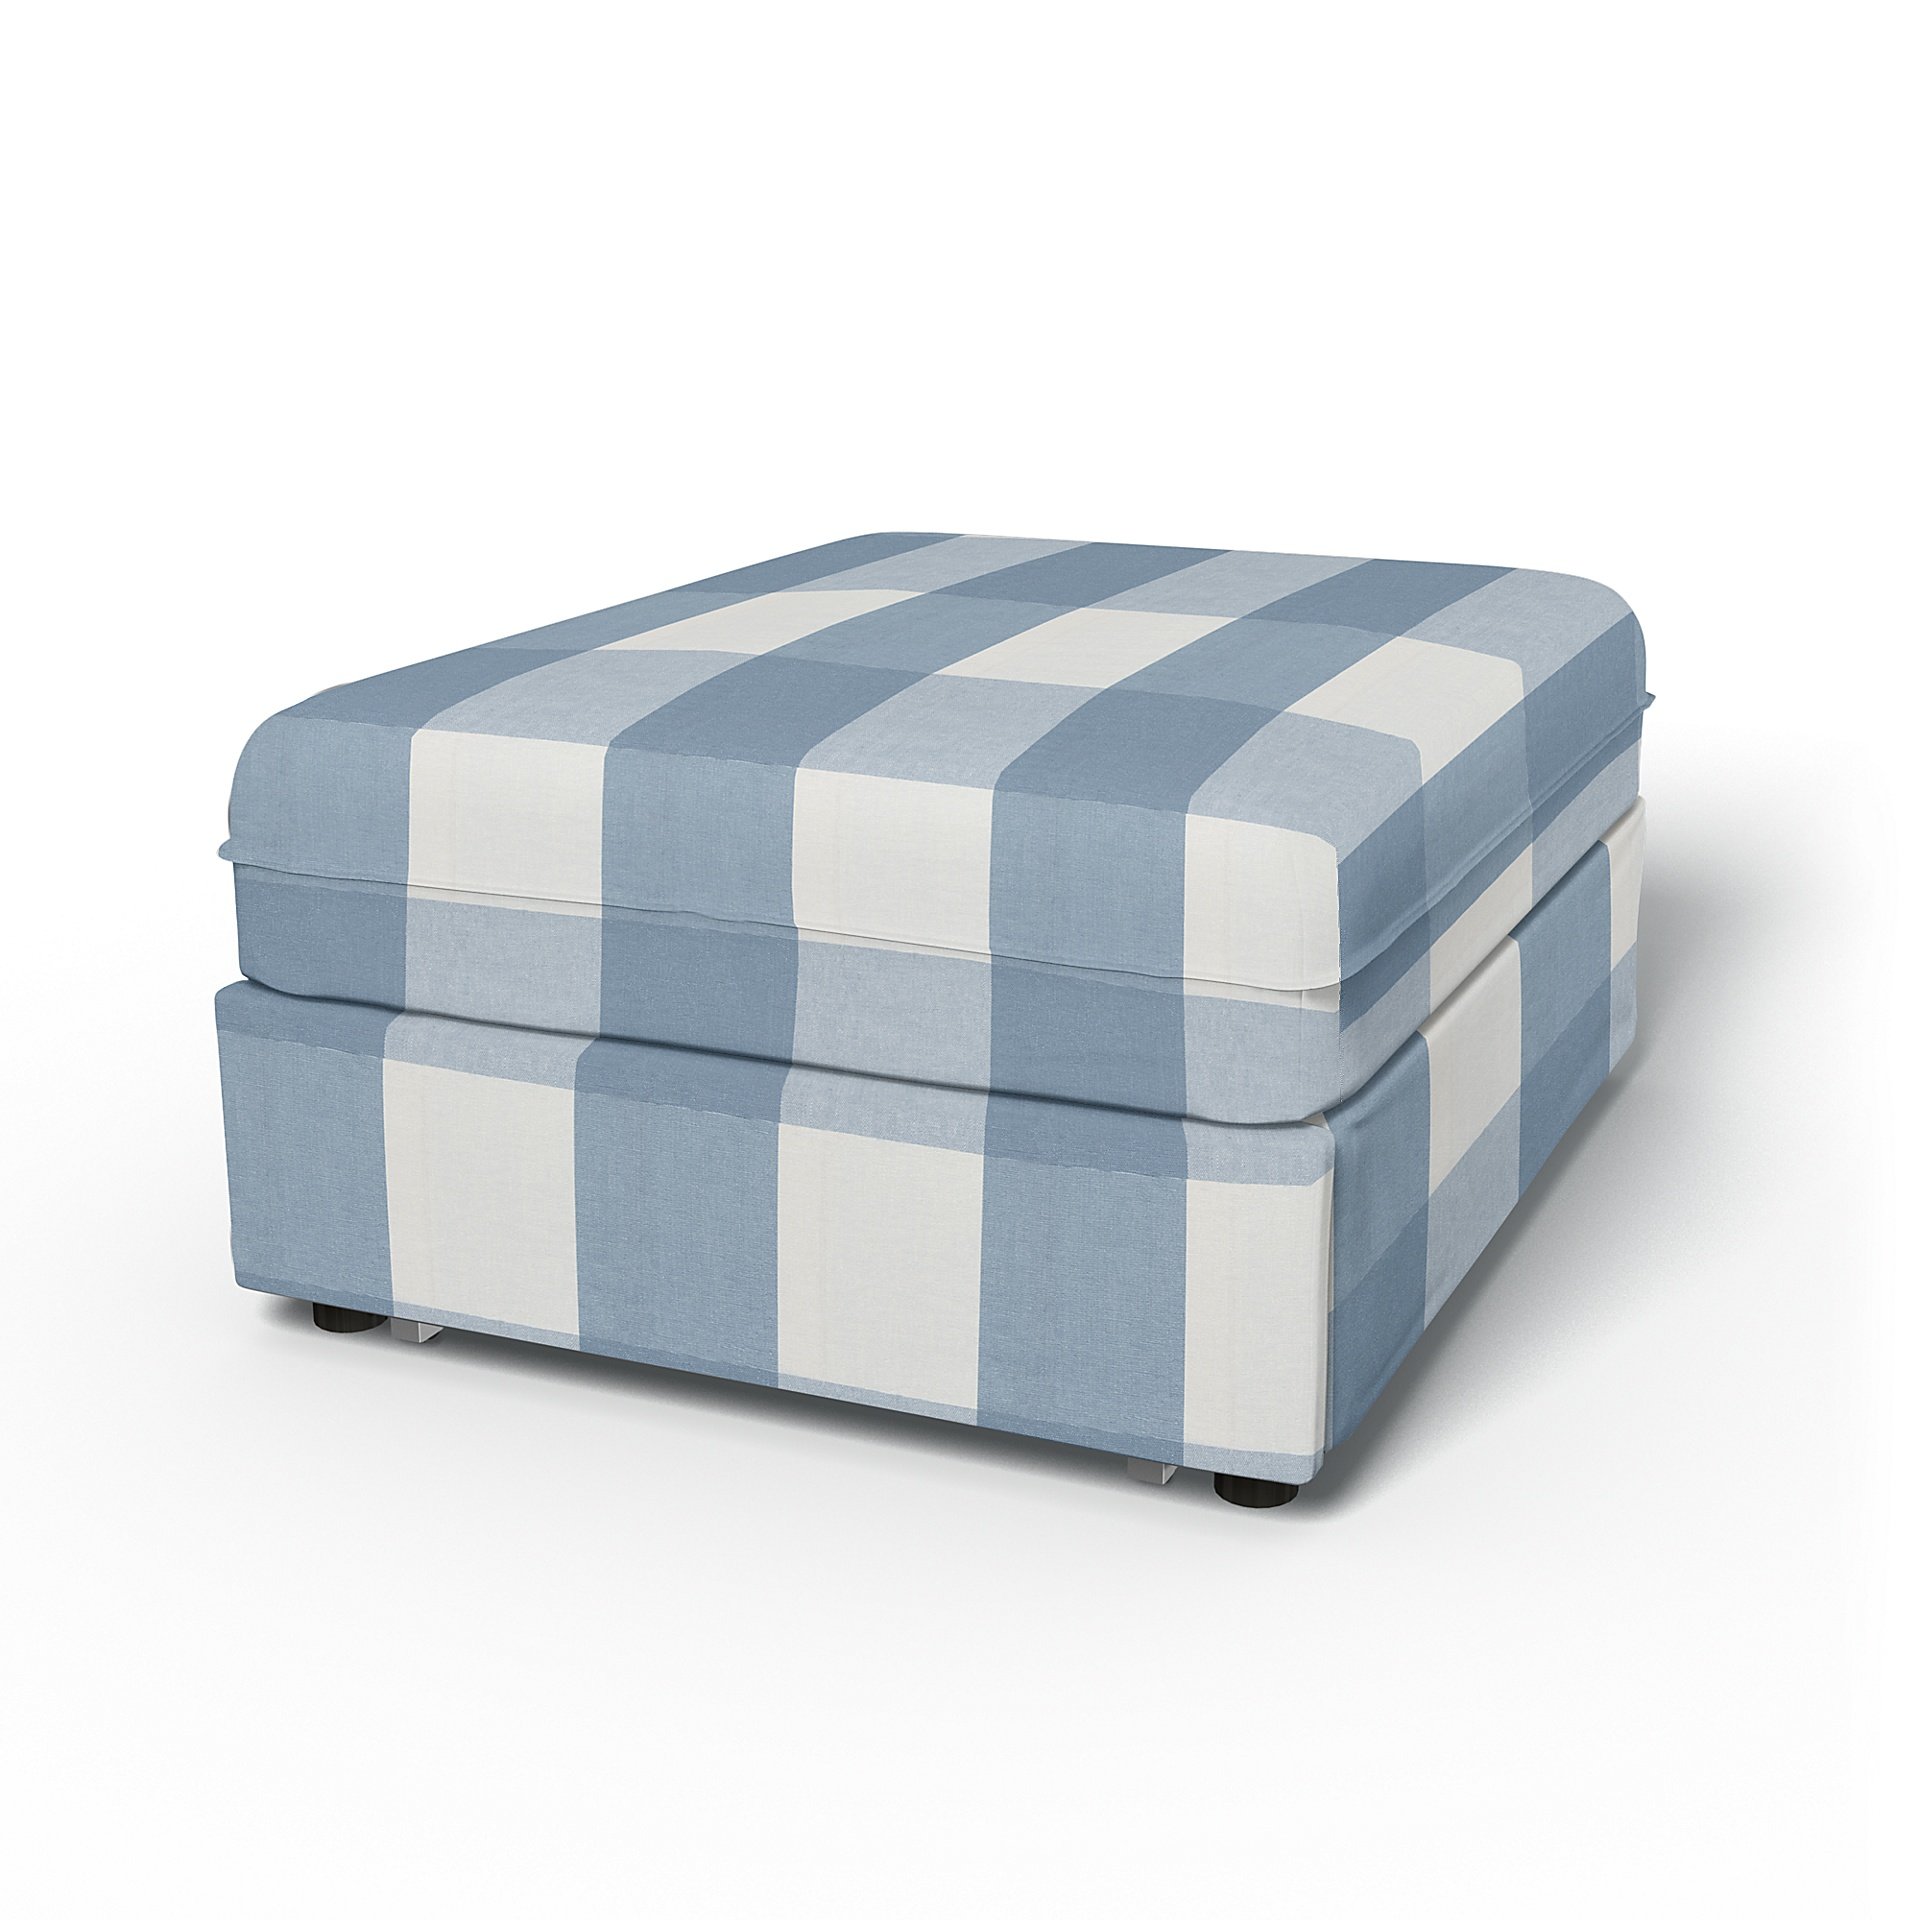 IKEA - Vallentuna Seat Module with Sofa Bed Cover 80x100cm 32x39in, Sky Blue, Linen - Bemz